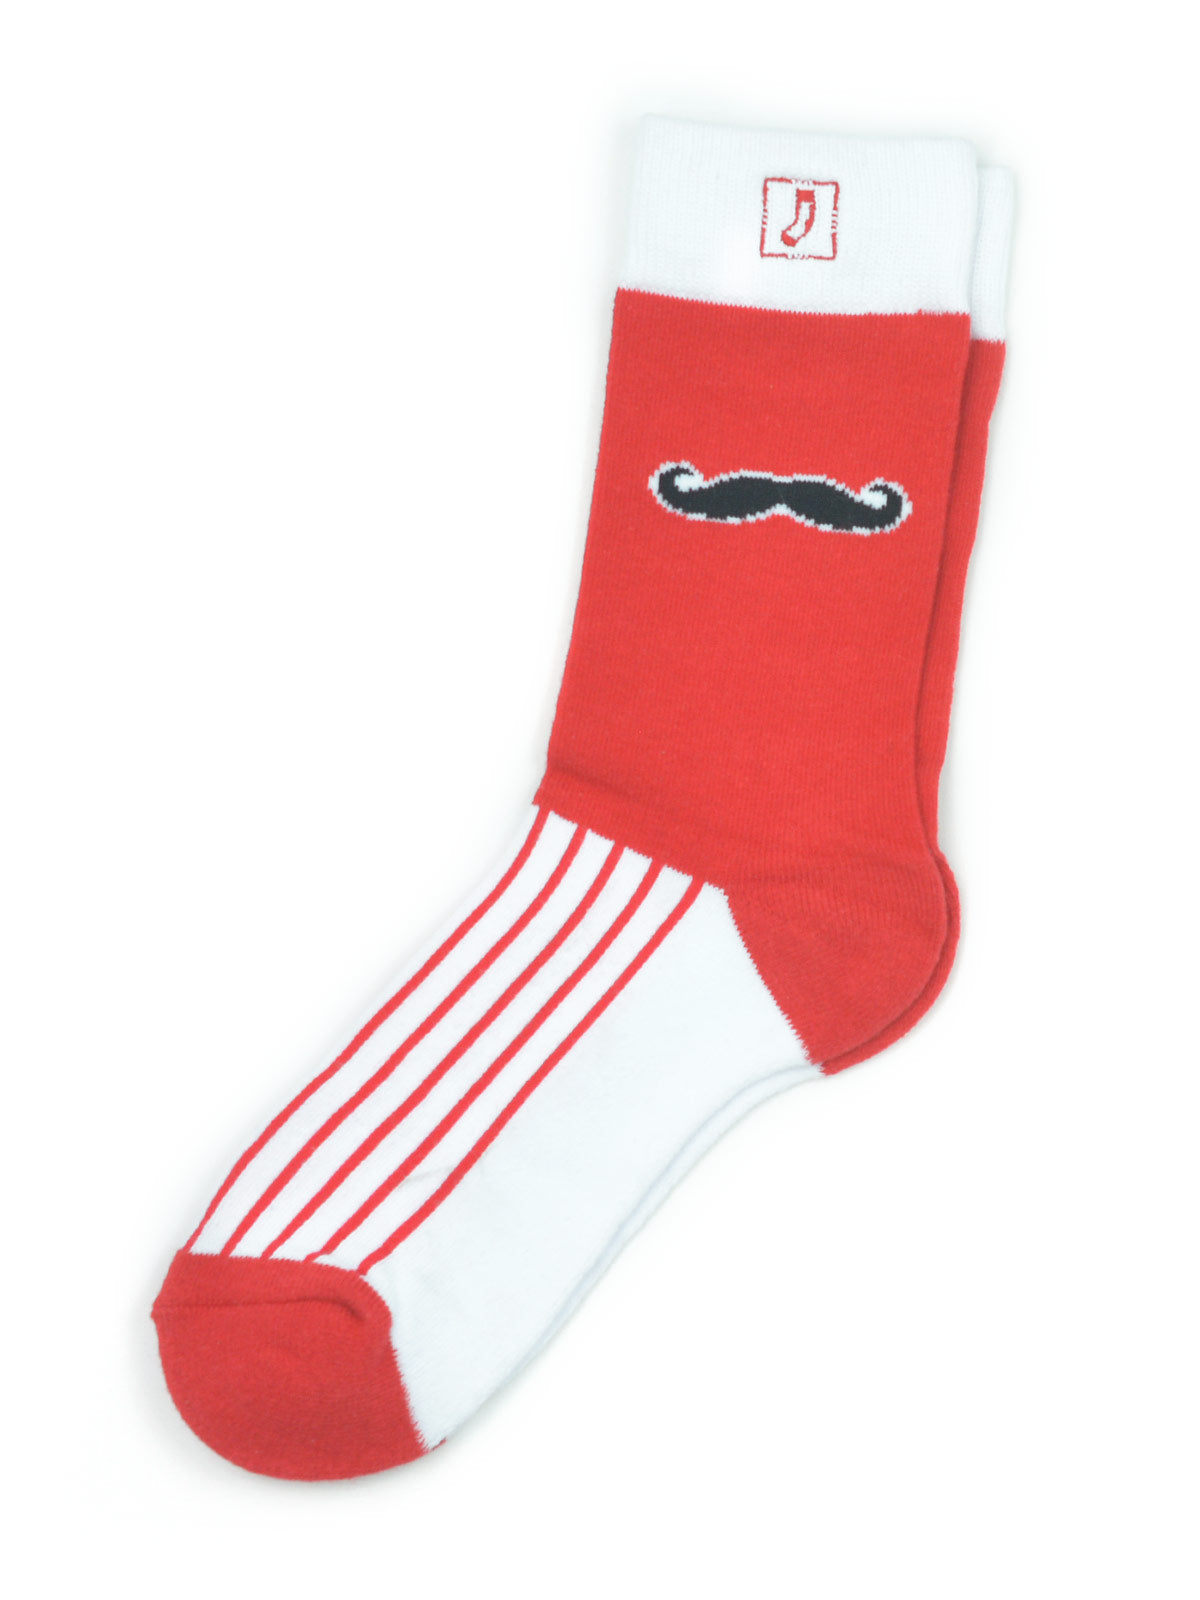 Cincinnati Mustache Socks